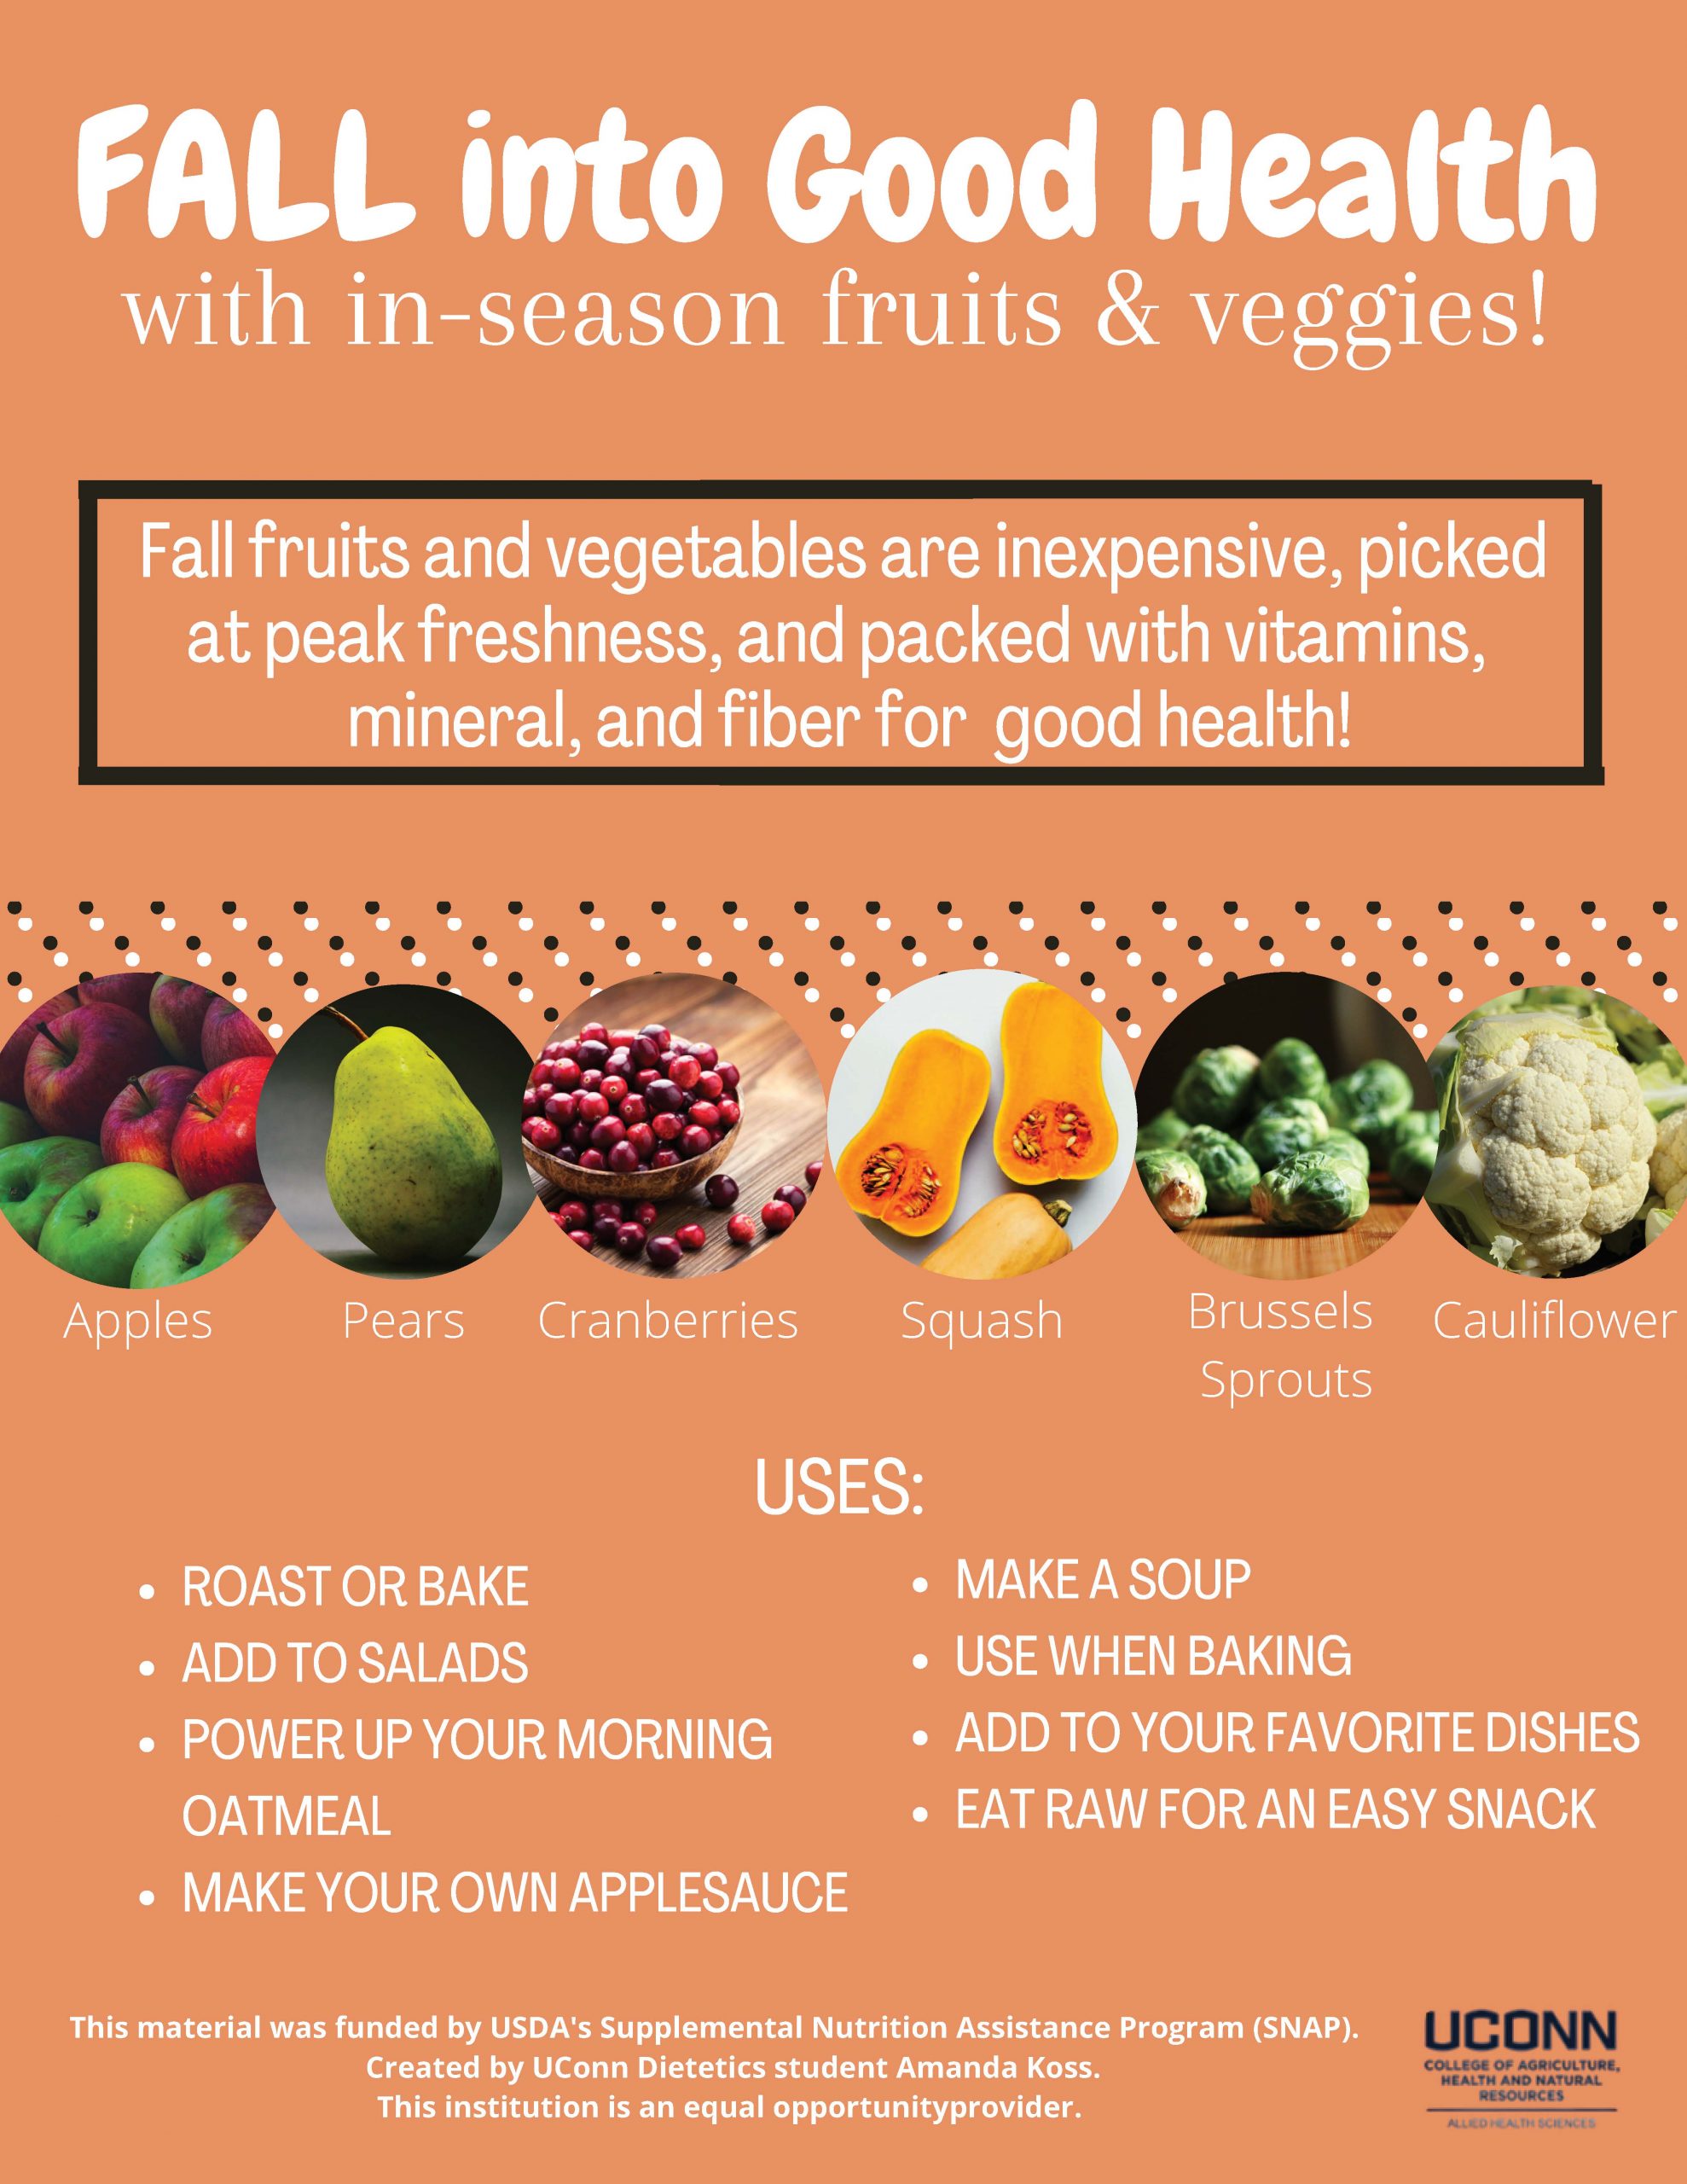 Fruit Storage infographic